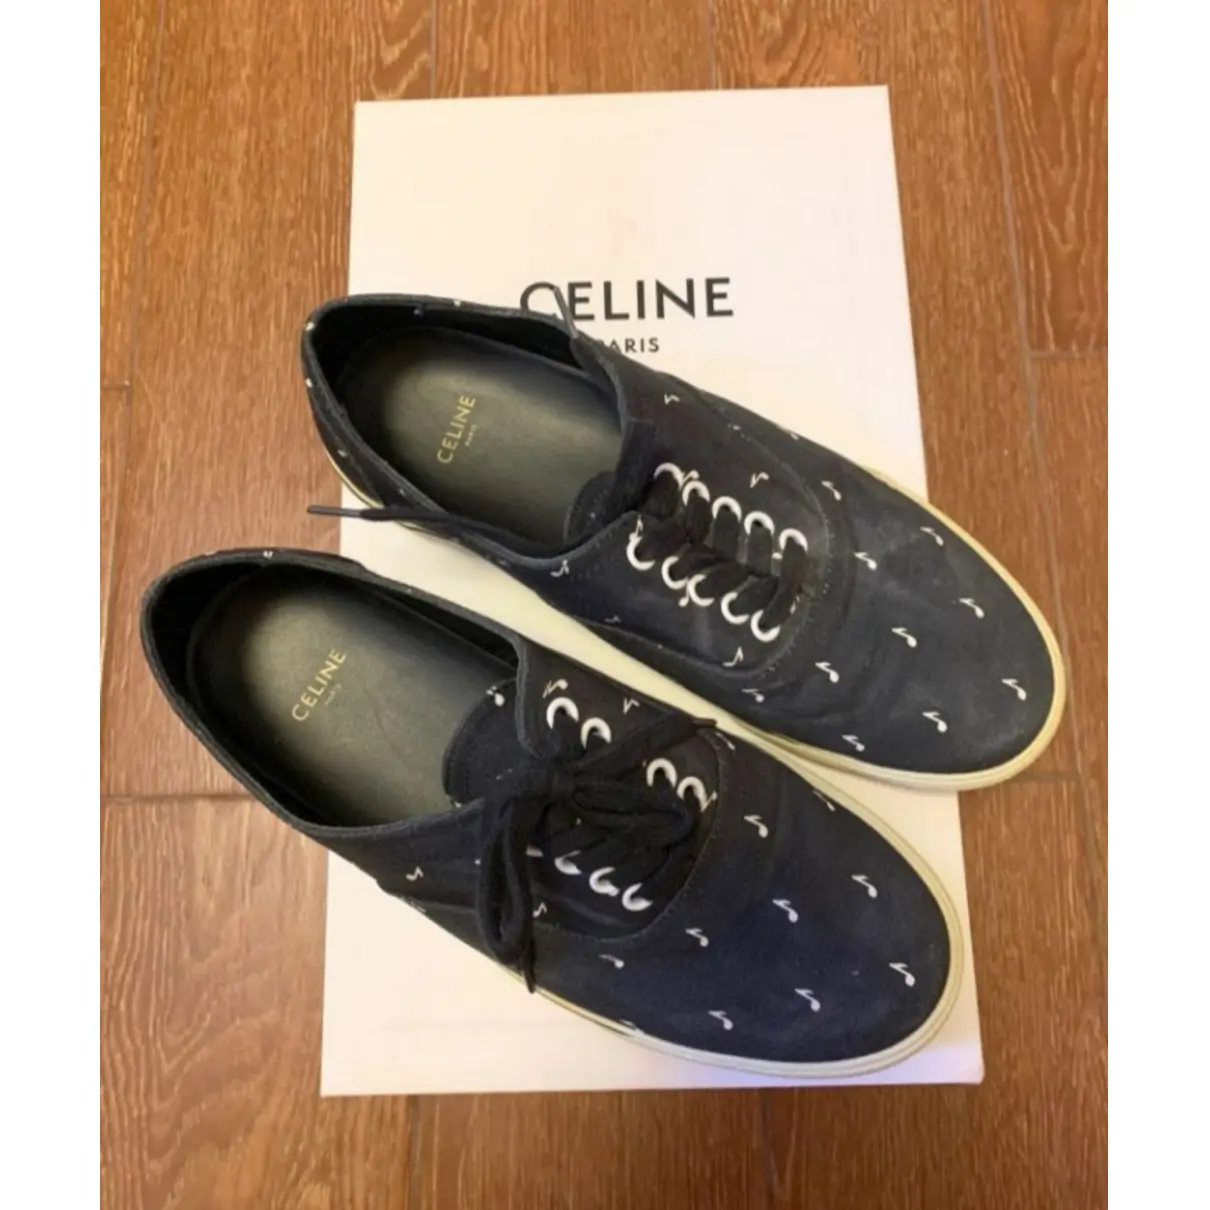 Buy Celine Elliot cloth trainers online